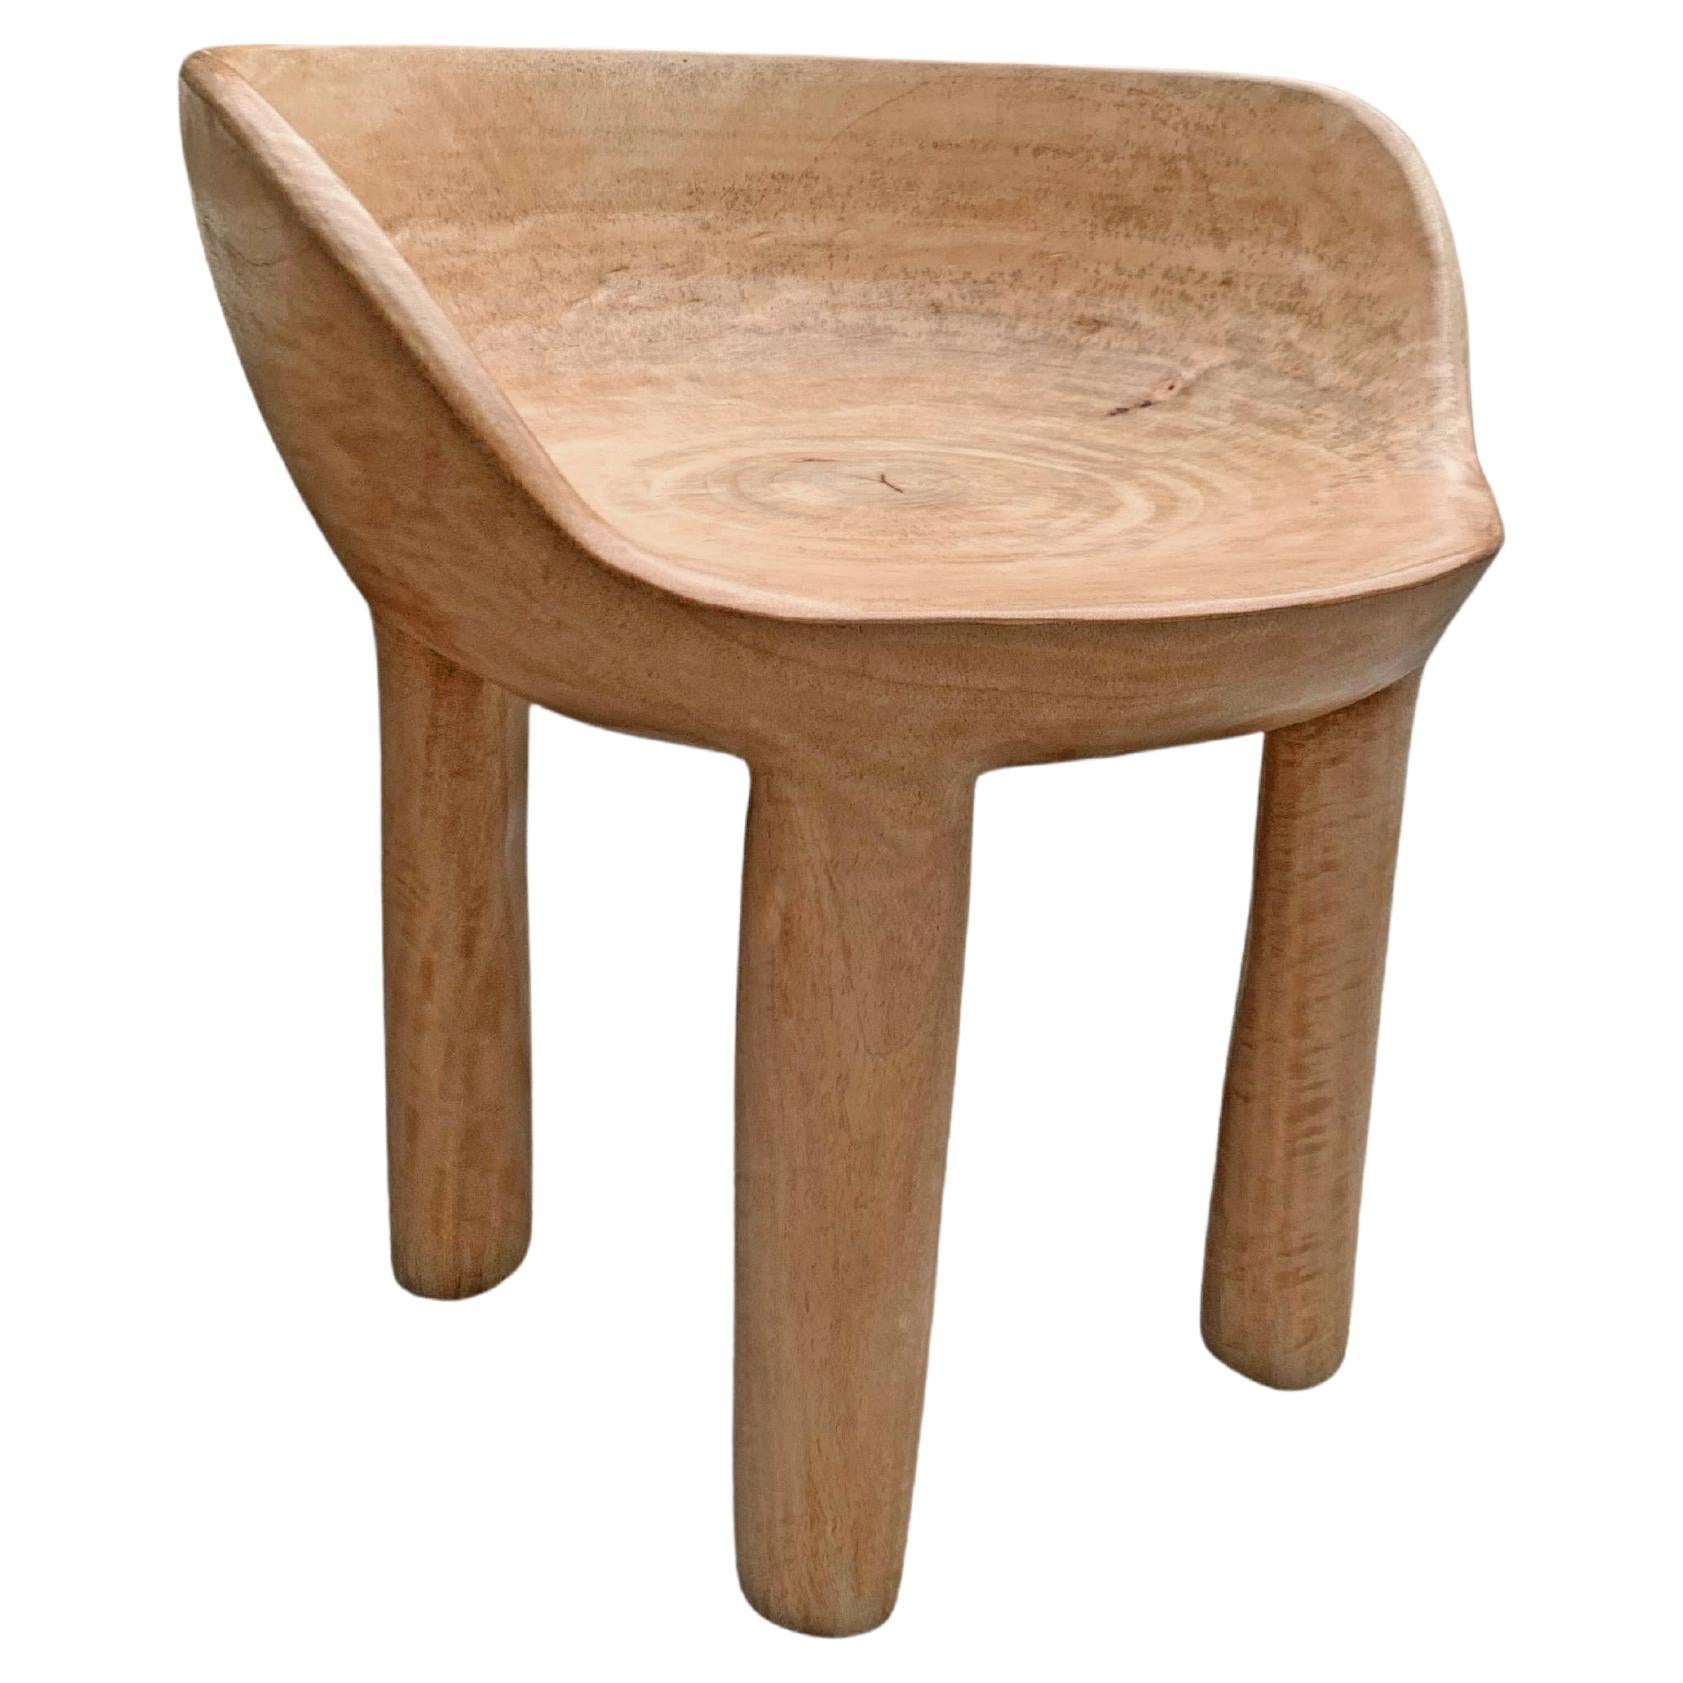 Sculptural Mango Wood Chair Modern Organic